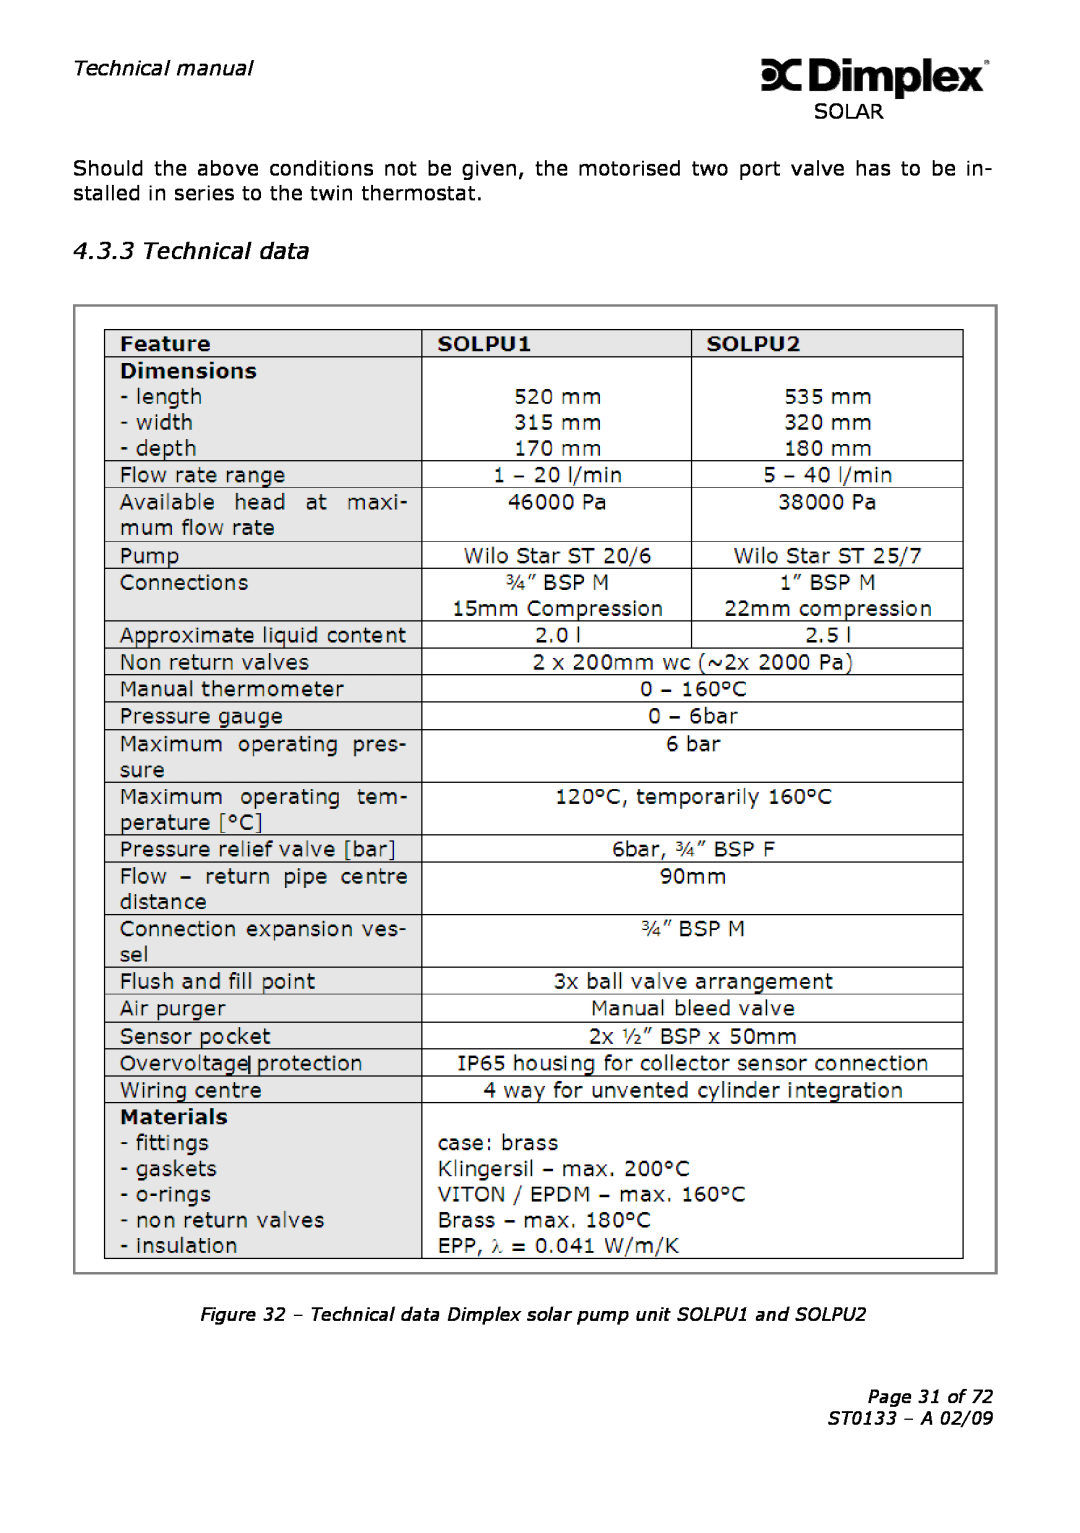 Dimplex technical manual Technical data Dimplex solar pump unit SOLPU1 and SOLPU2, Page 31 of ST0133 - A 02/09 